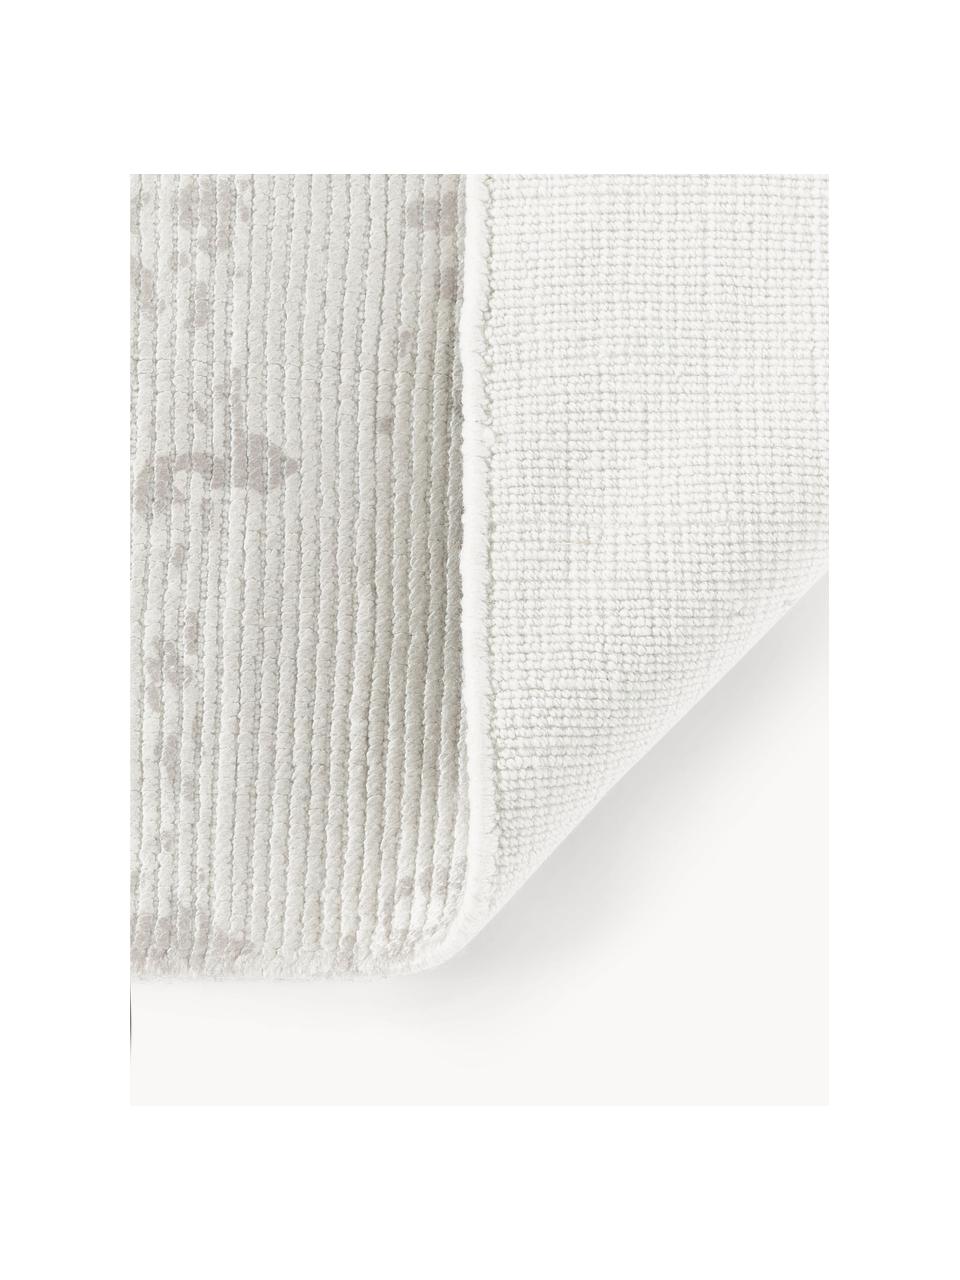 Tapis à poils ras tissé main Nantes, 100 % polyester, certifié GRS, Grège, larg. 80 x long. 150 cm (taille XS)